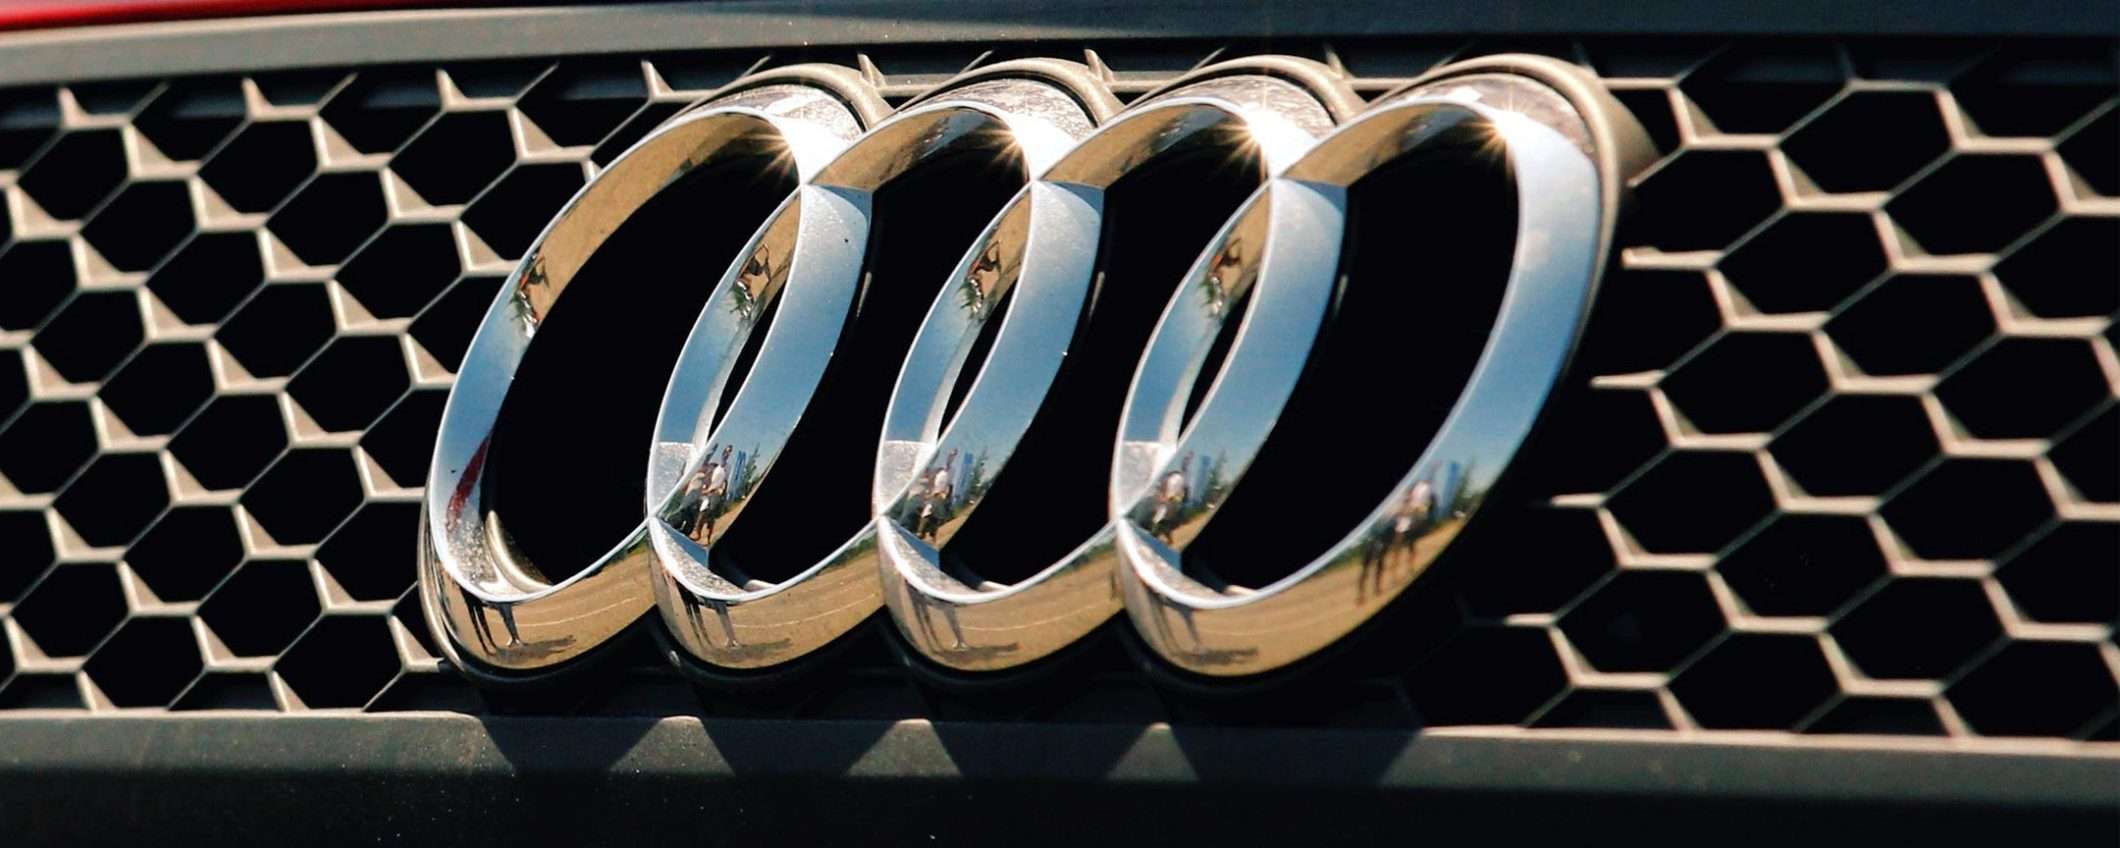 La guida autonoma secondo Audi AID e Luminar